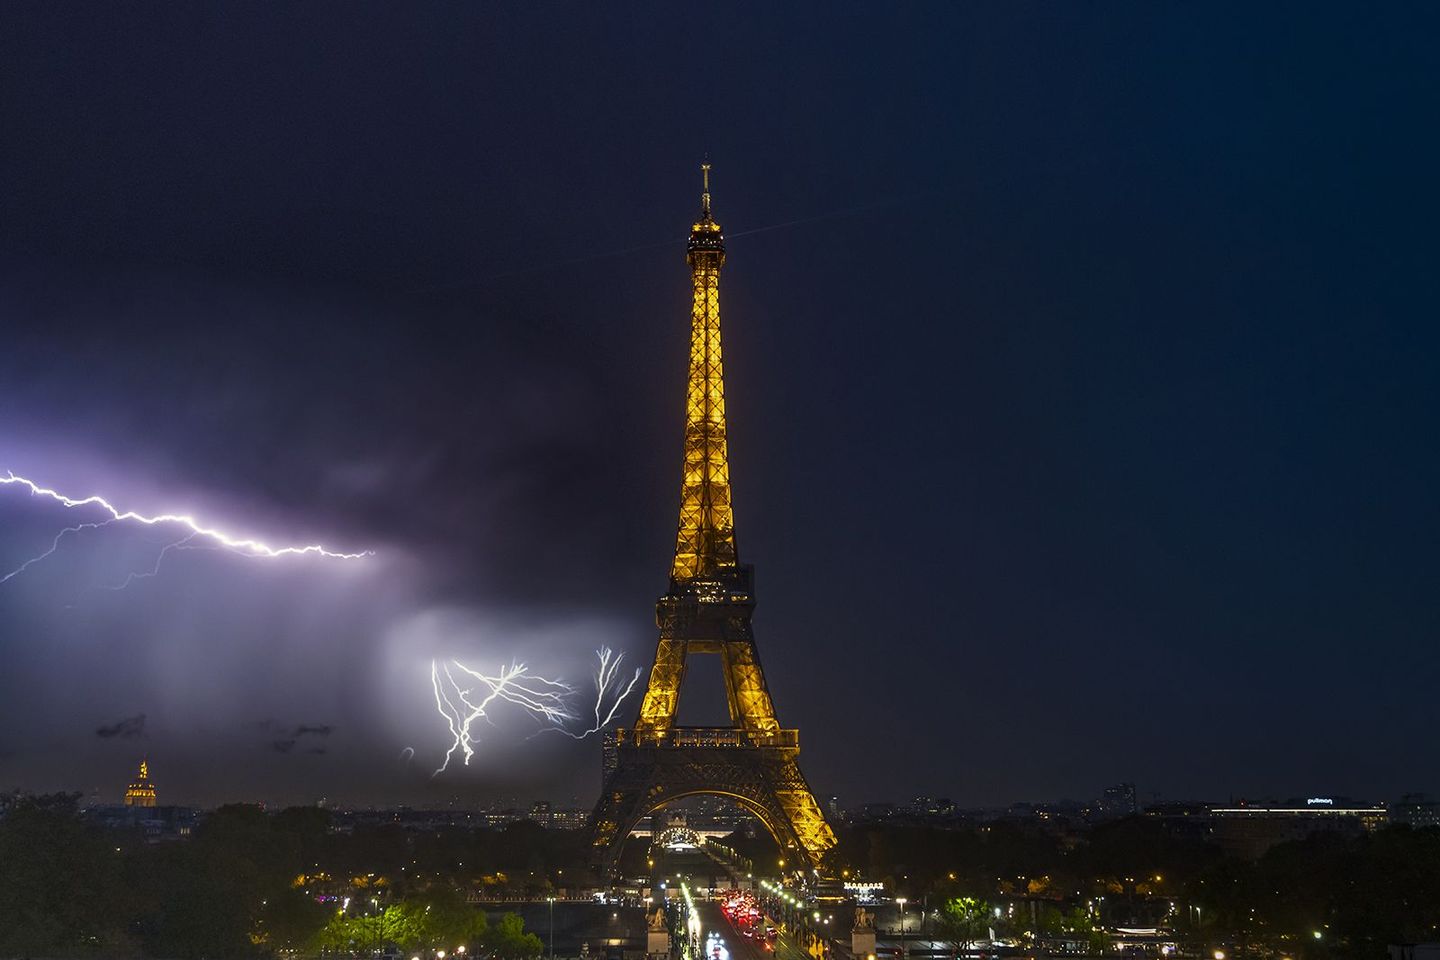 Eifel Tower Paris France Photo Gallery by David Ferguson